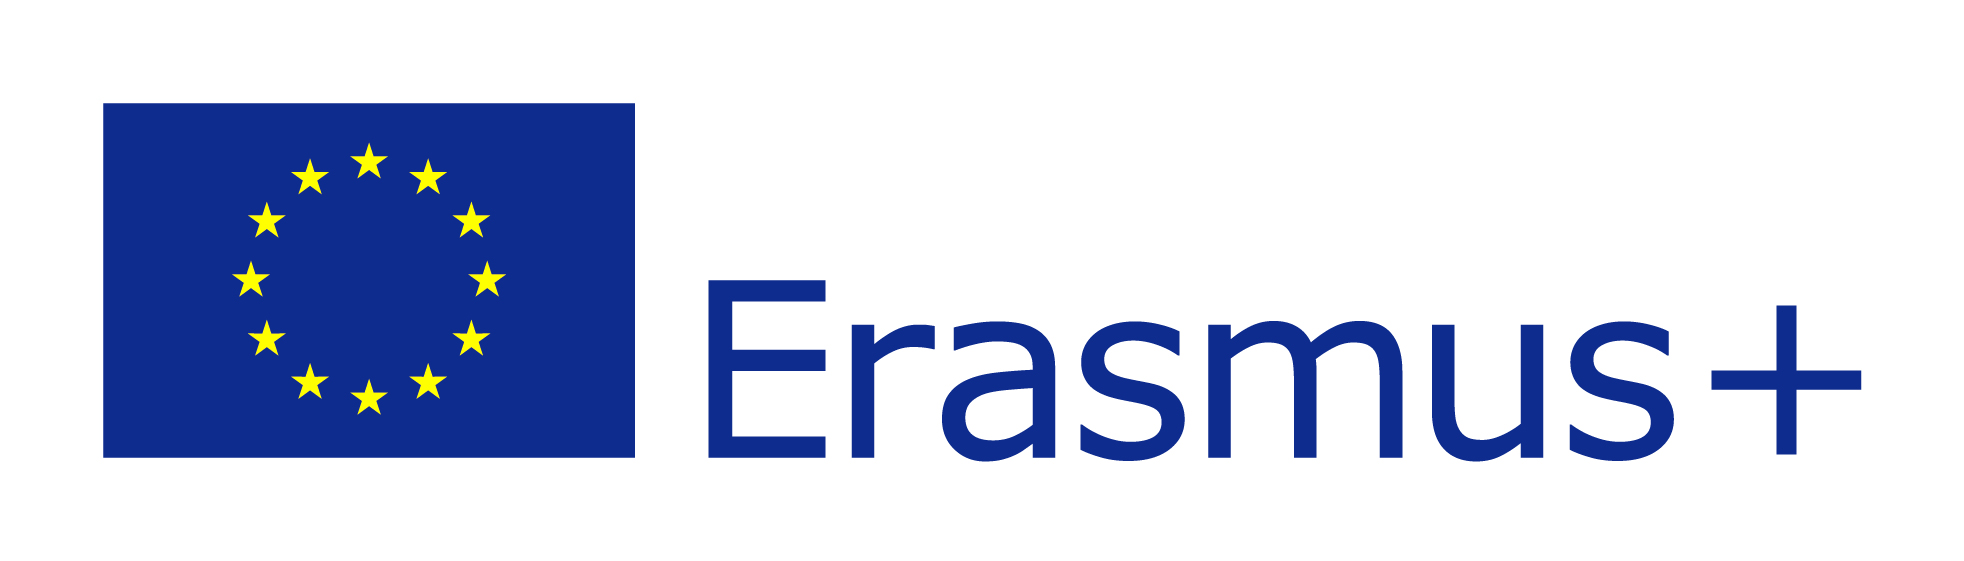 EU flag-Erasmus+_vect_POS.jpg